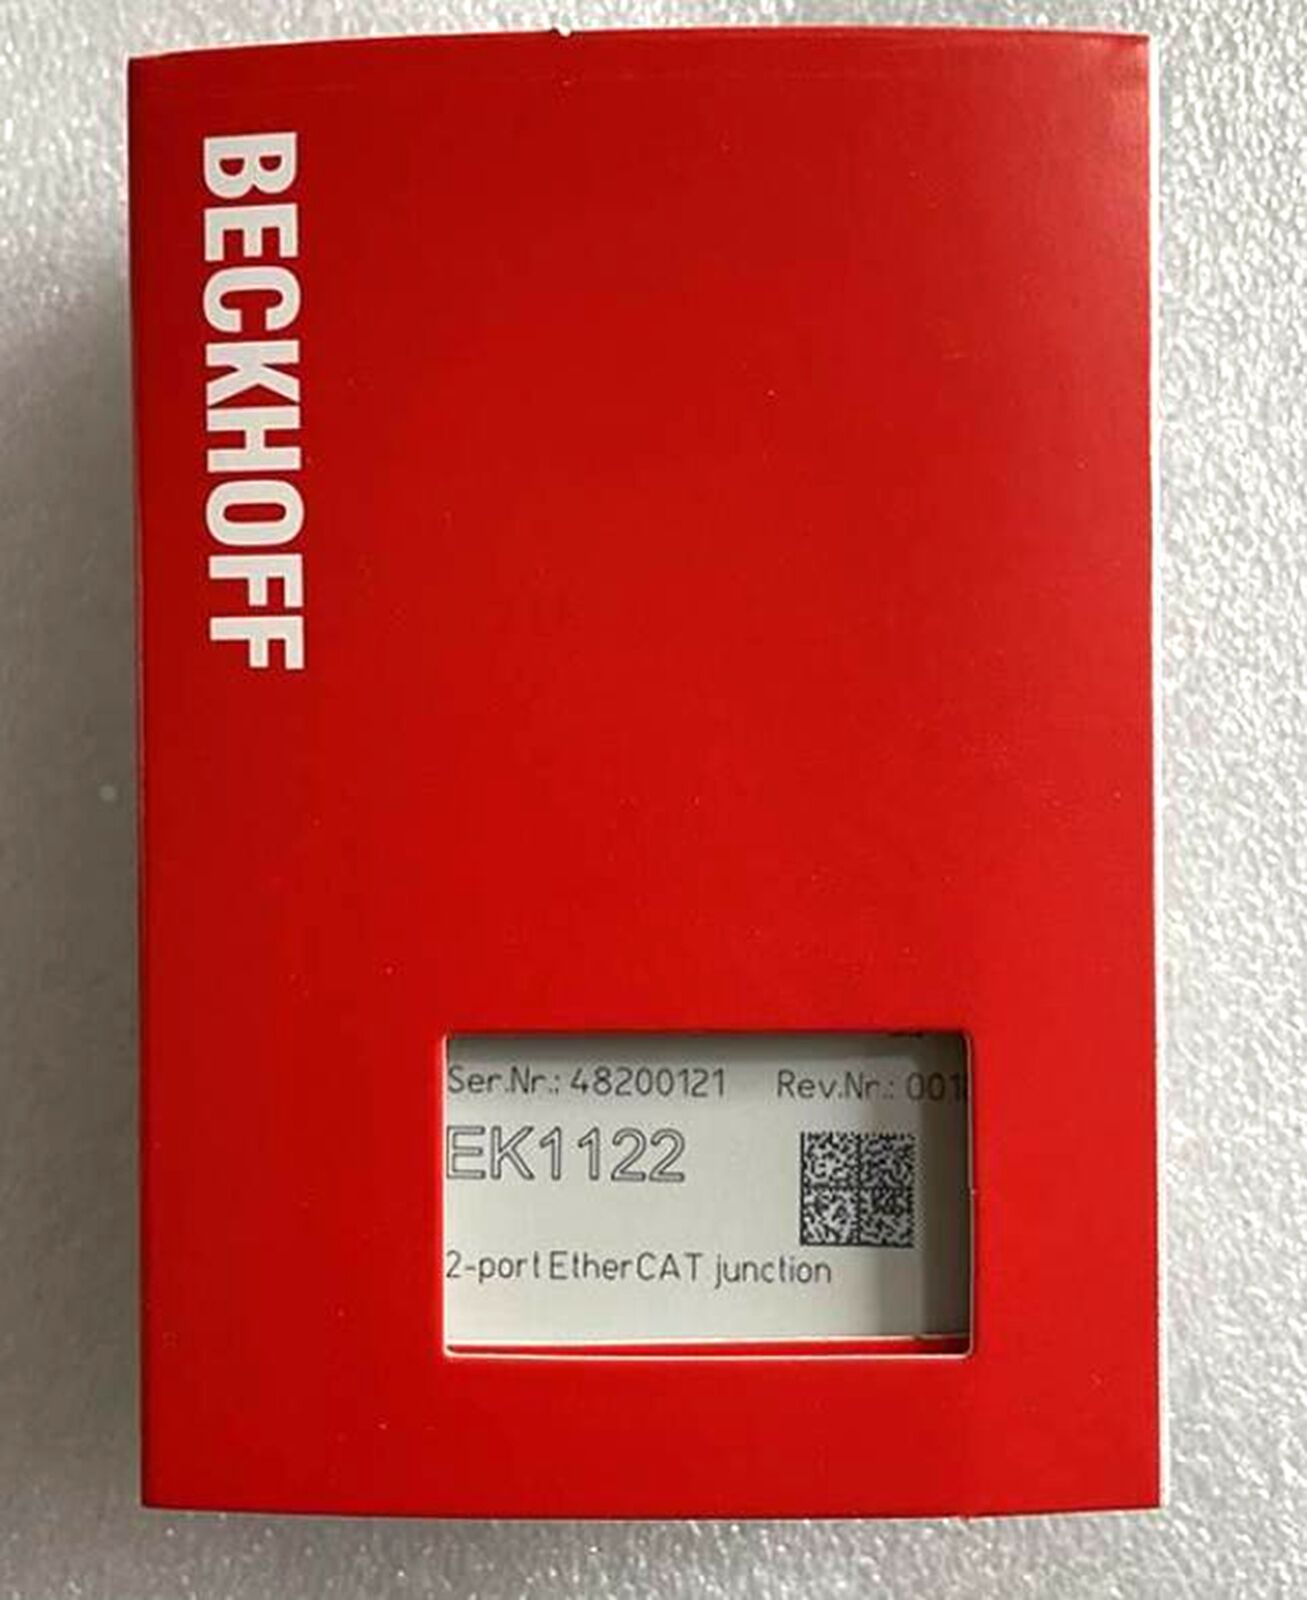 1PCS Beckhoff EK1122 PLC Module EK1122 New In Box Expedited Shipping KOEED BECKHOFF, NEW